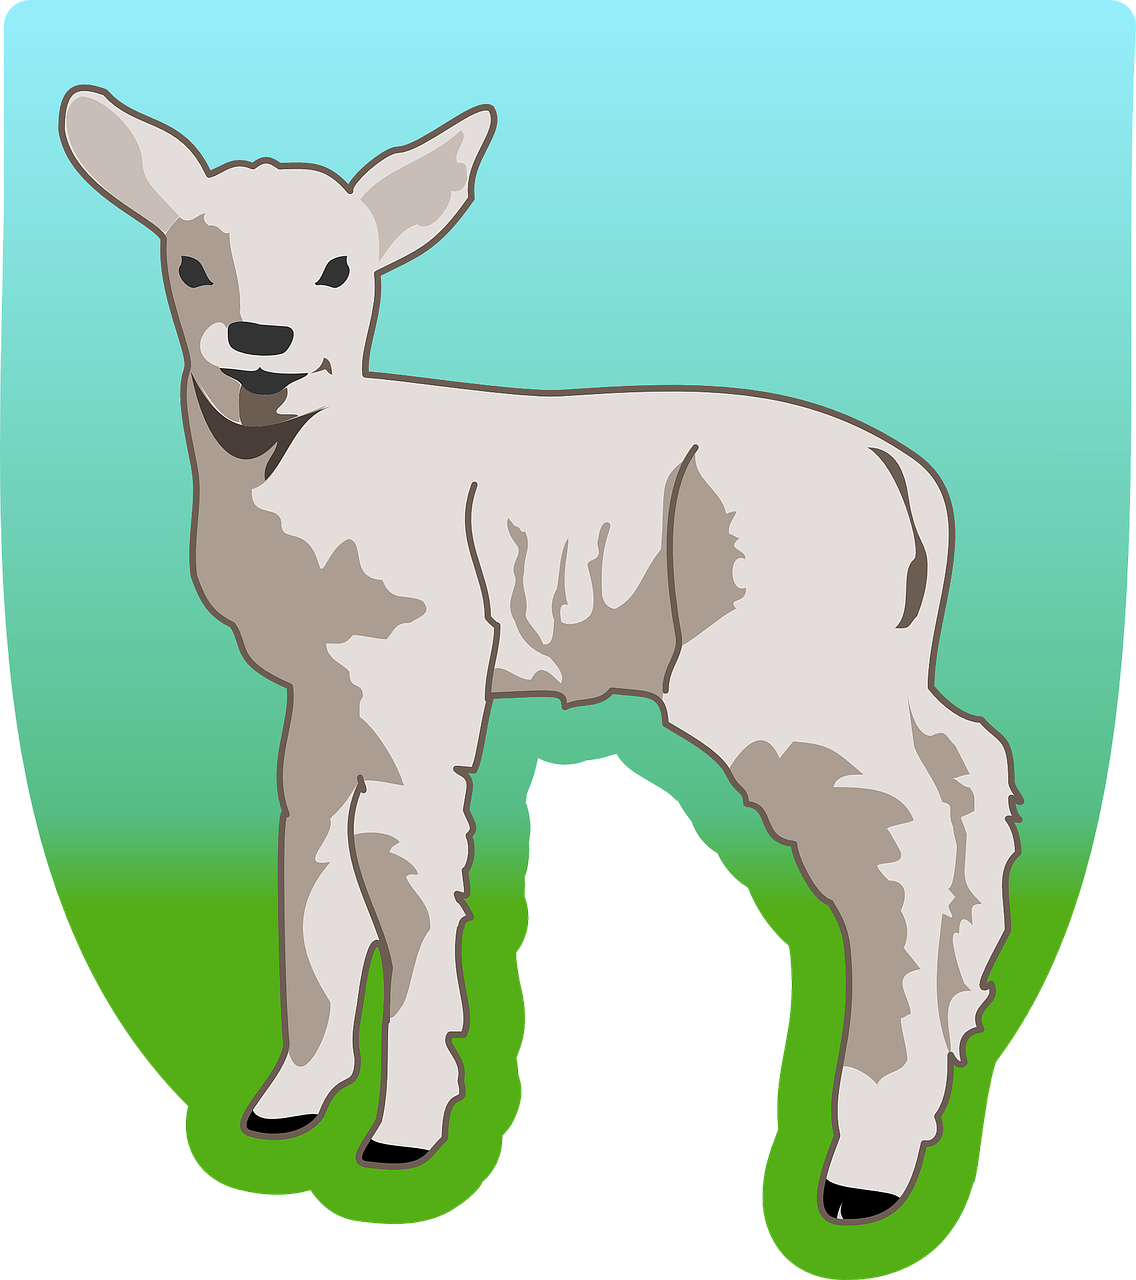 lamb sheep livestock free photo